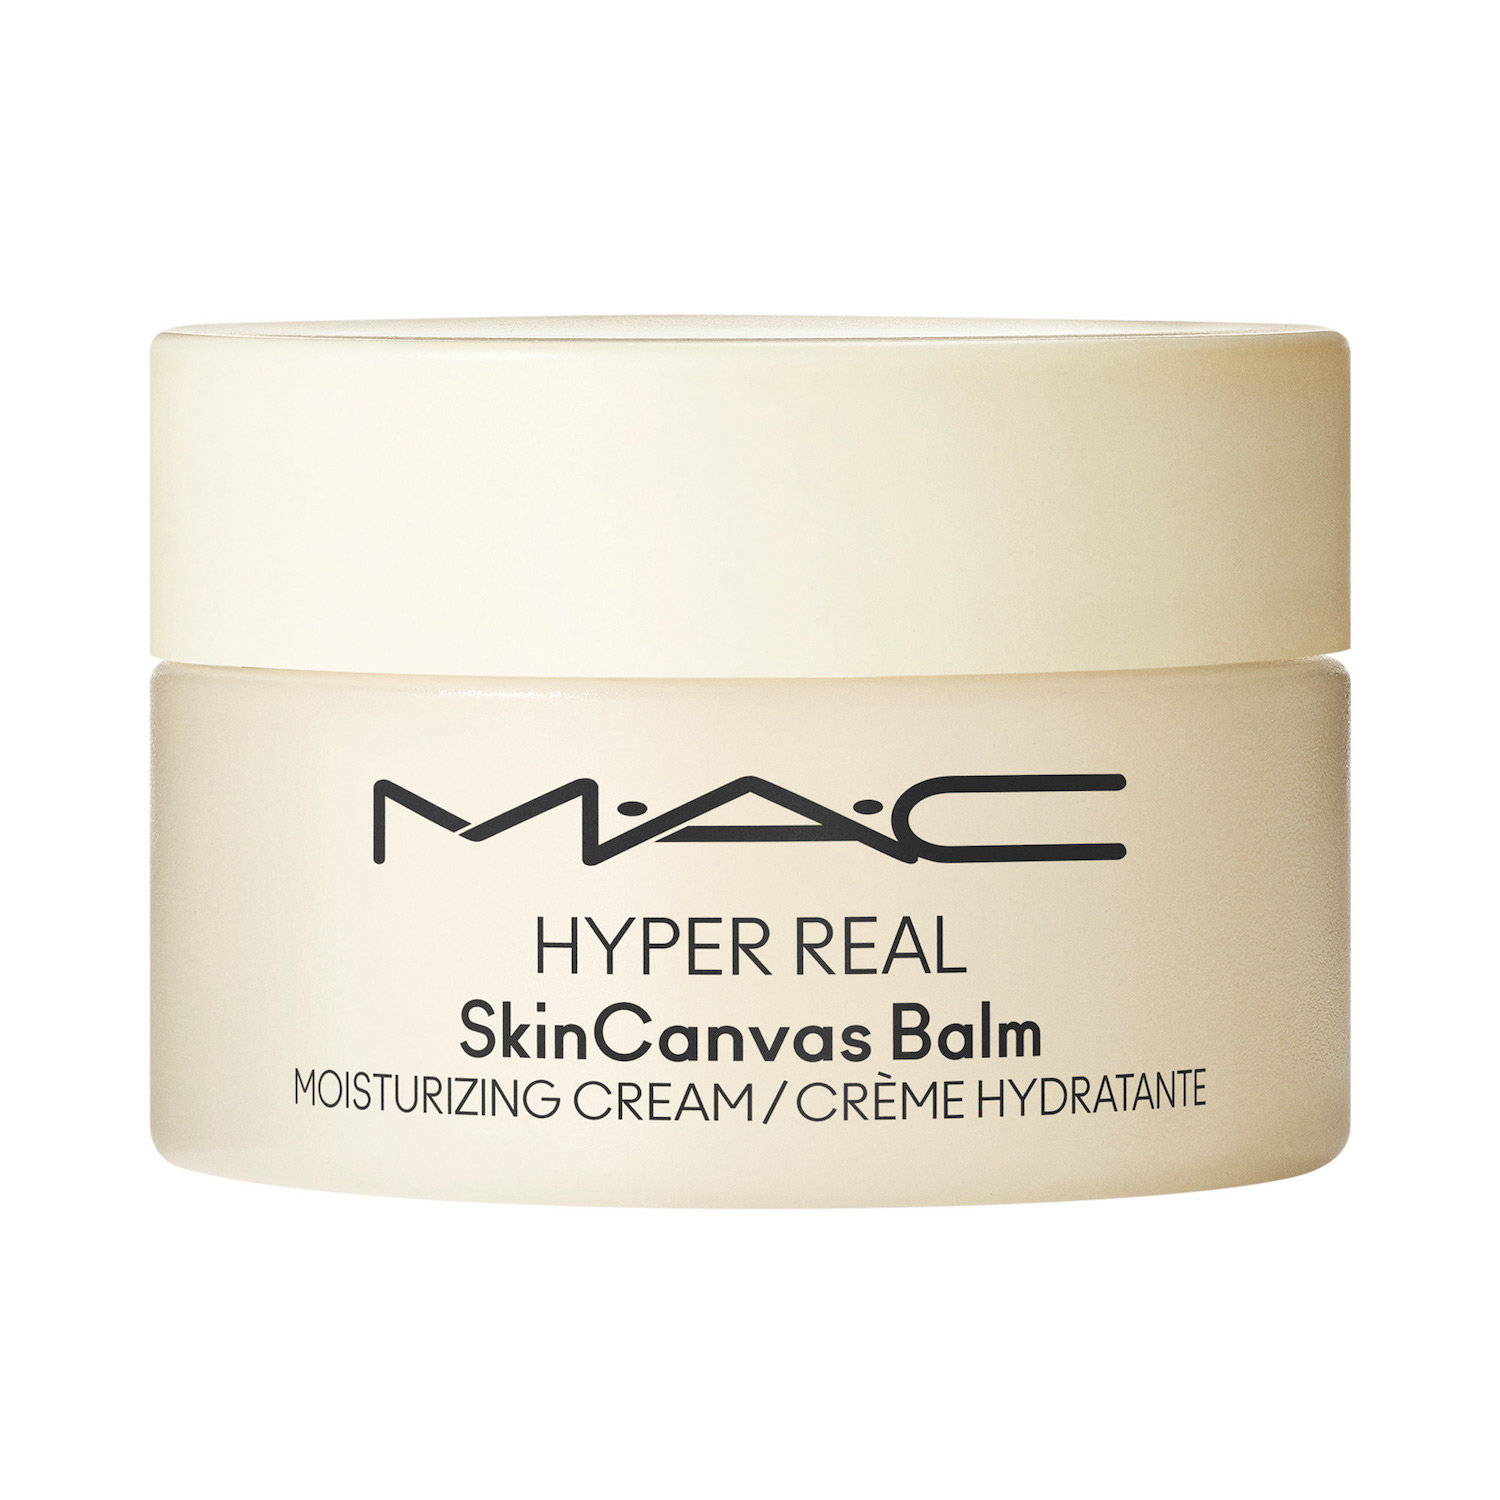 hyper real skincanvas balm moisturizing cream (crema hidratante)